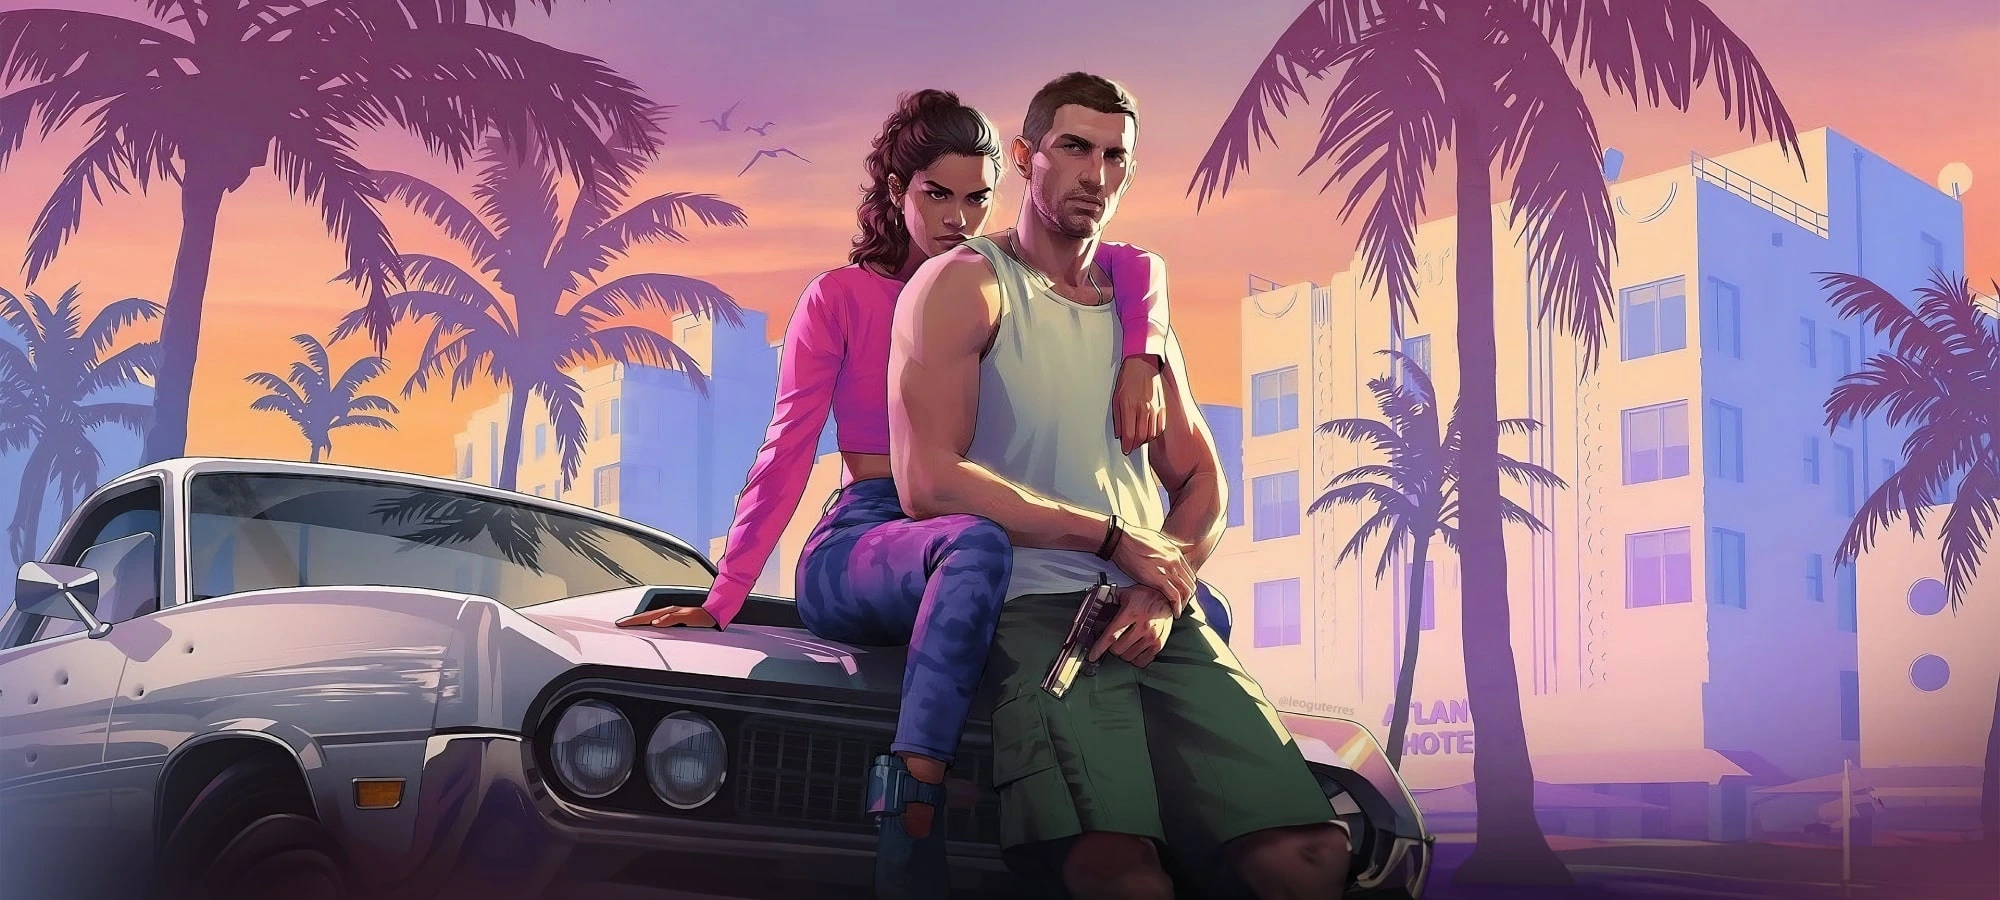 Grand Theft Auto VI (GTA 6) Unveiled